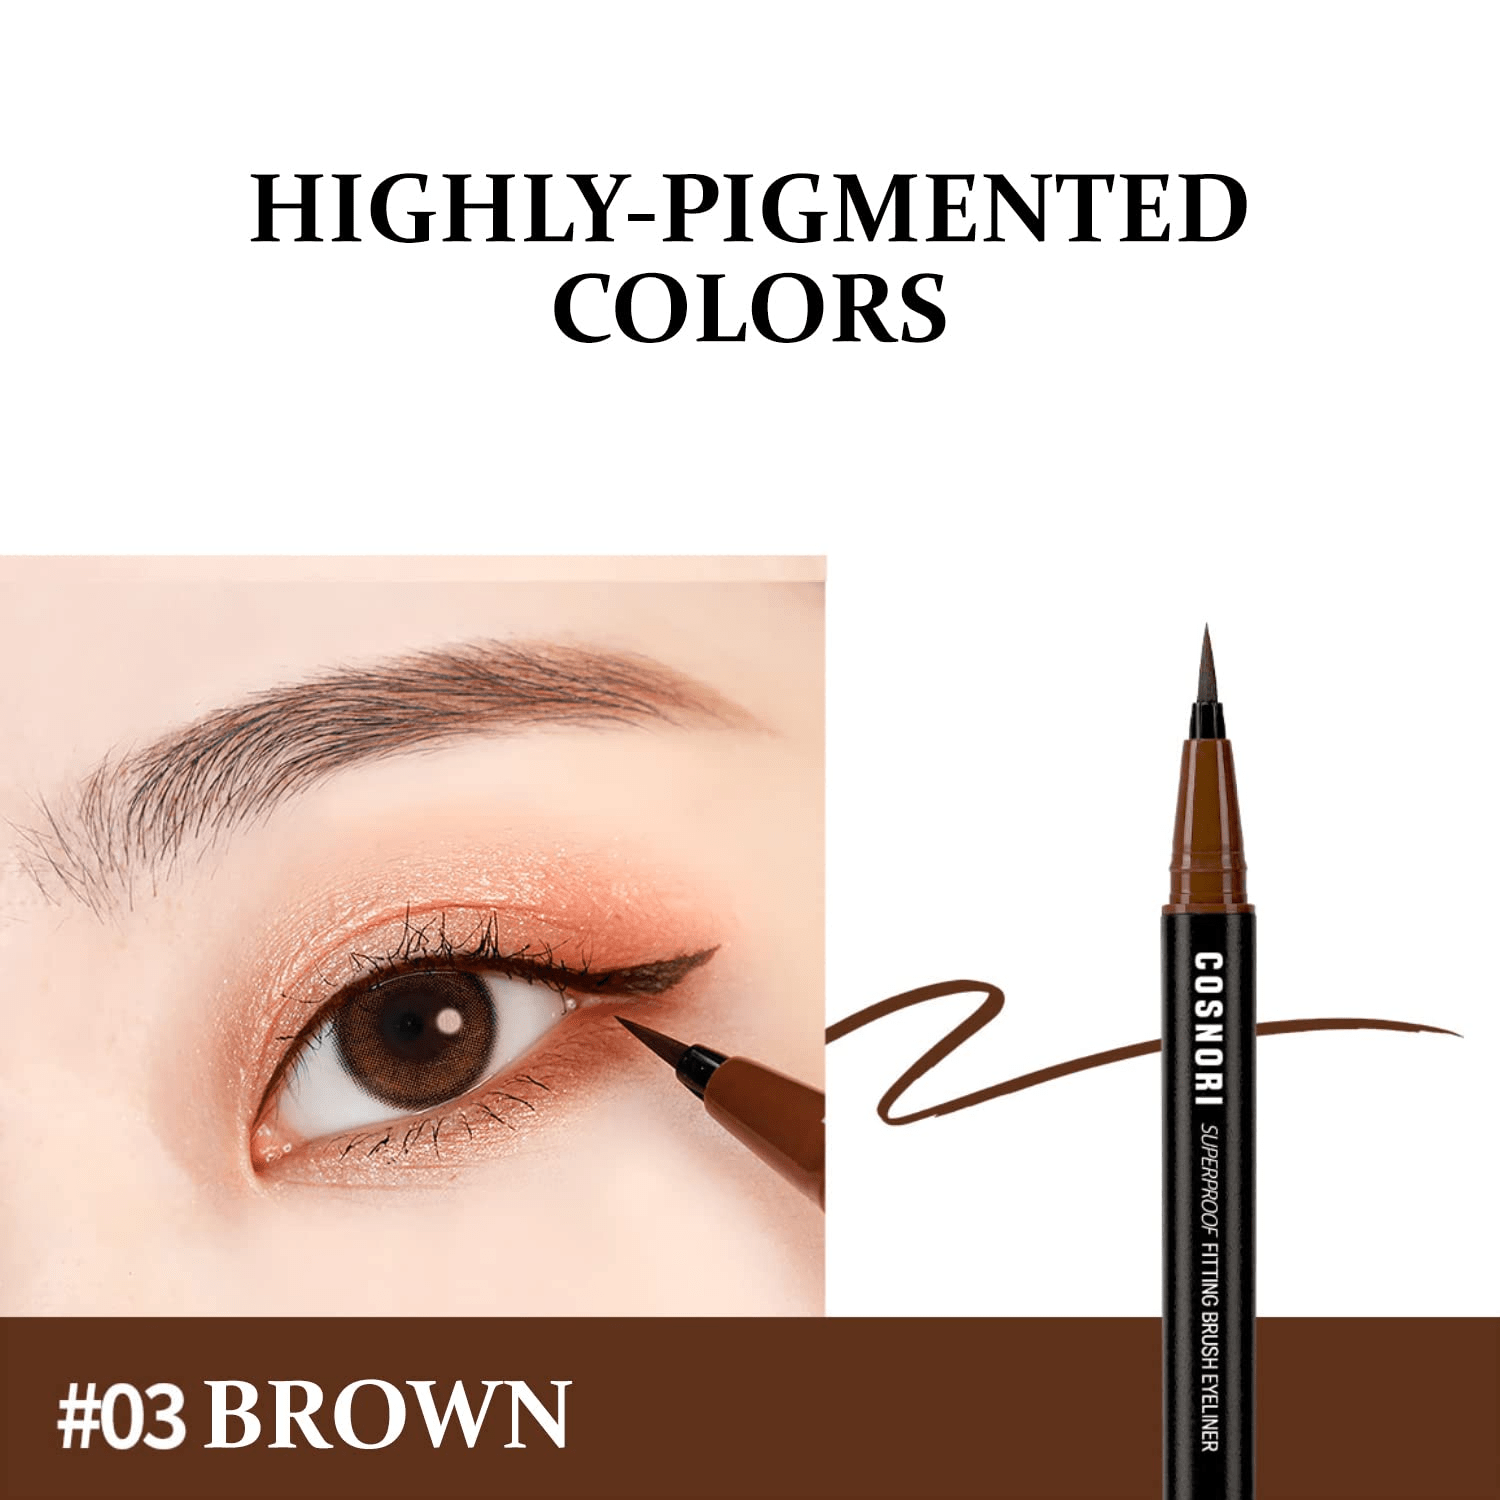 skincare-kbeauty-glowtime-cosnori superproof fitting btrush eyeliner 03 brown